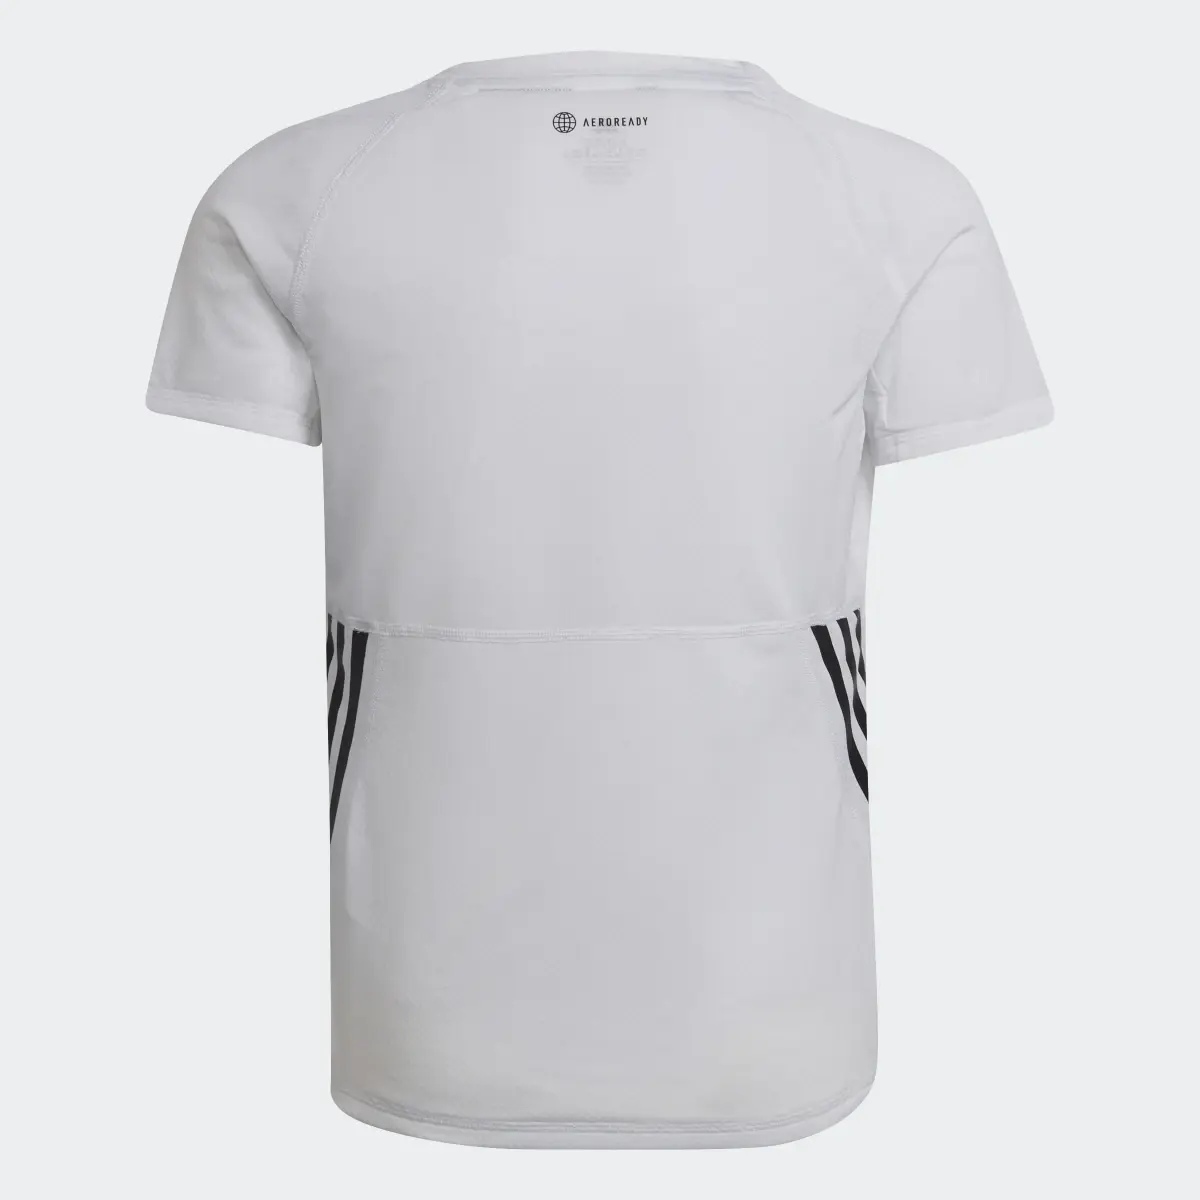 Adidas AEROREADY Training 3-Stripes T-Shirt. 2